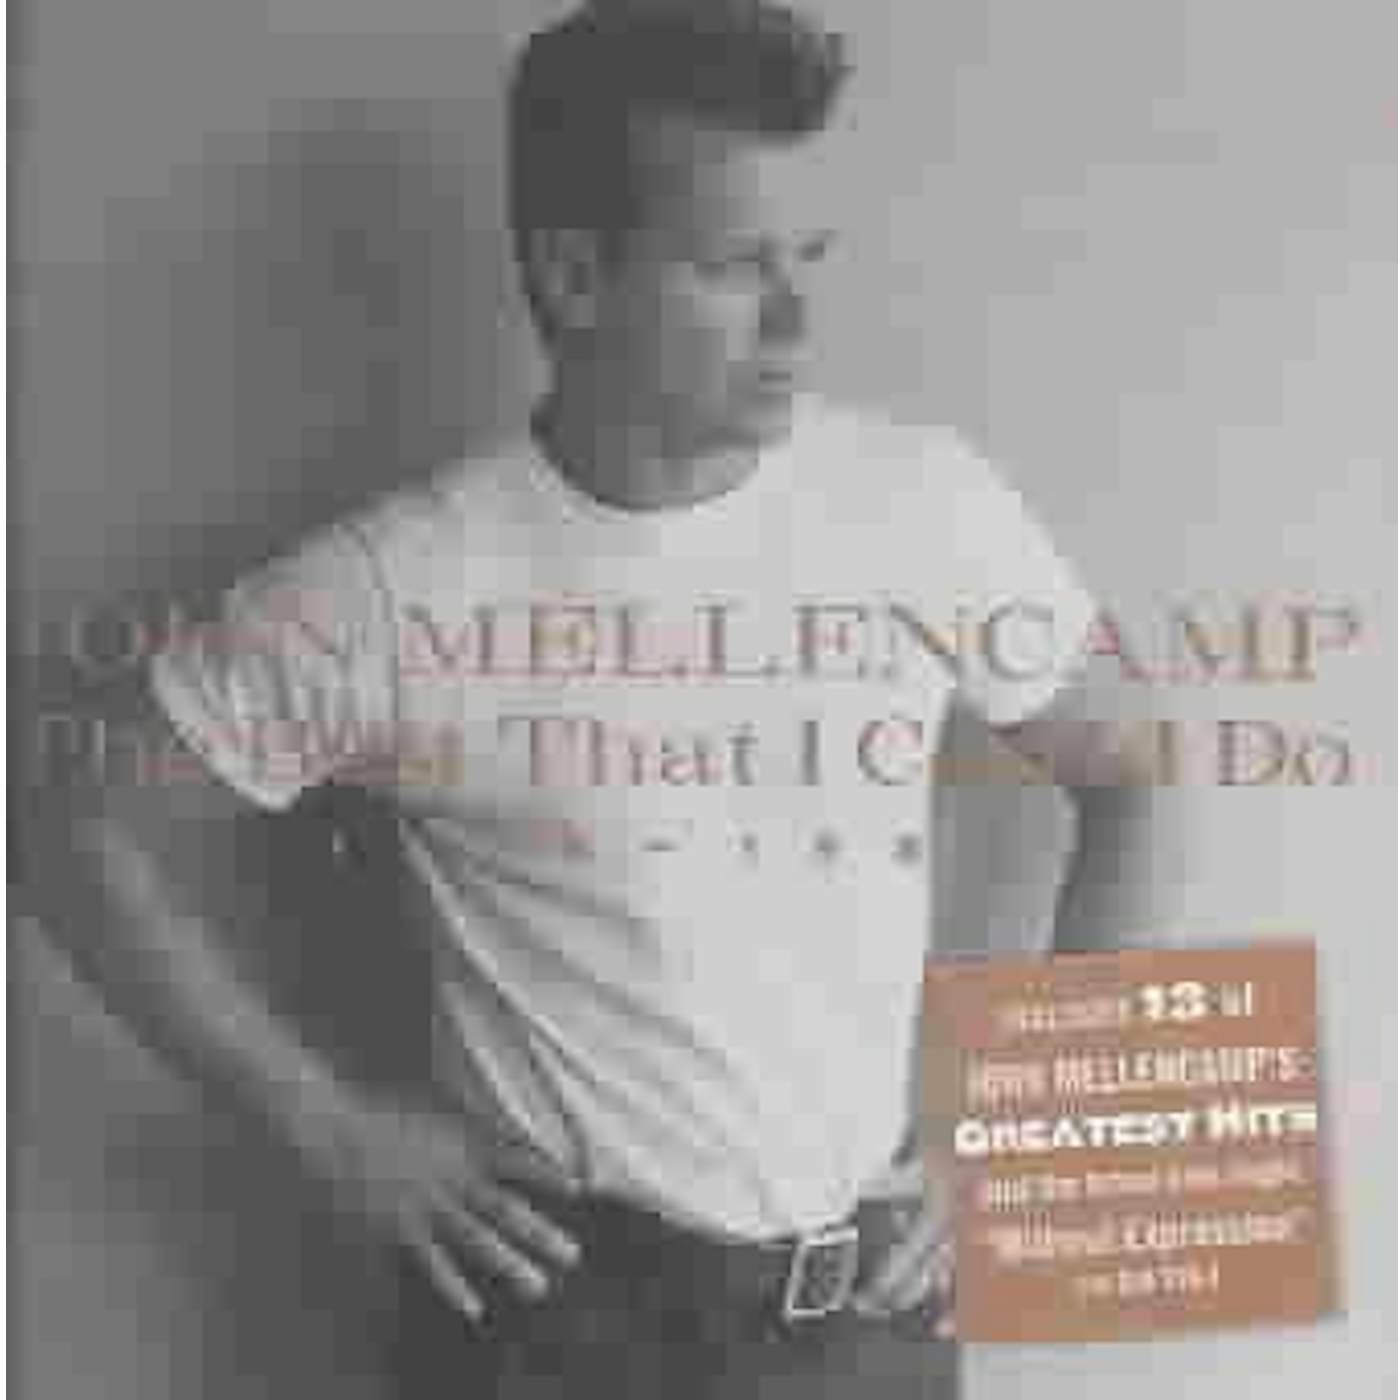 John Mellencamp BEST THAT I COULD DO 1978 - 1988 CD